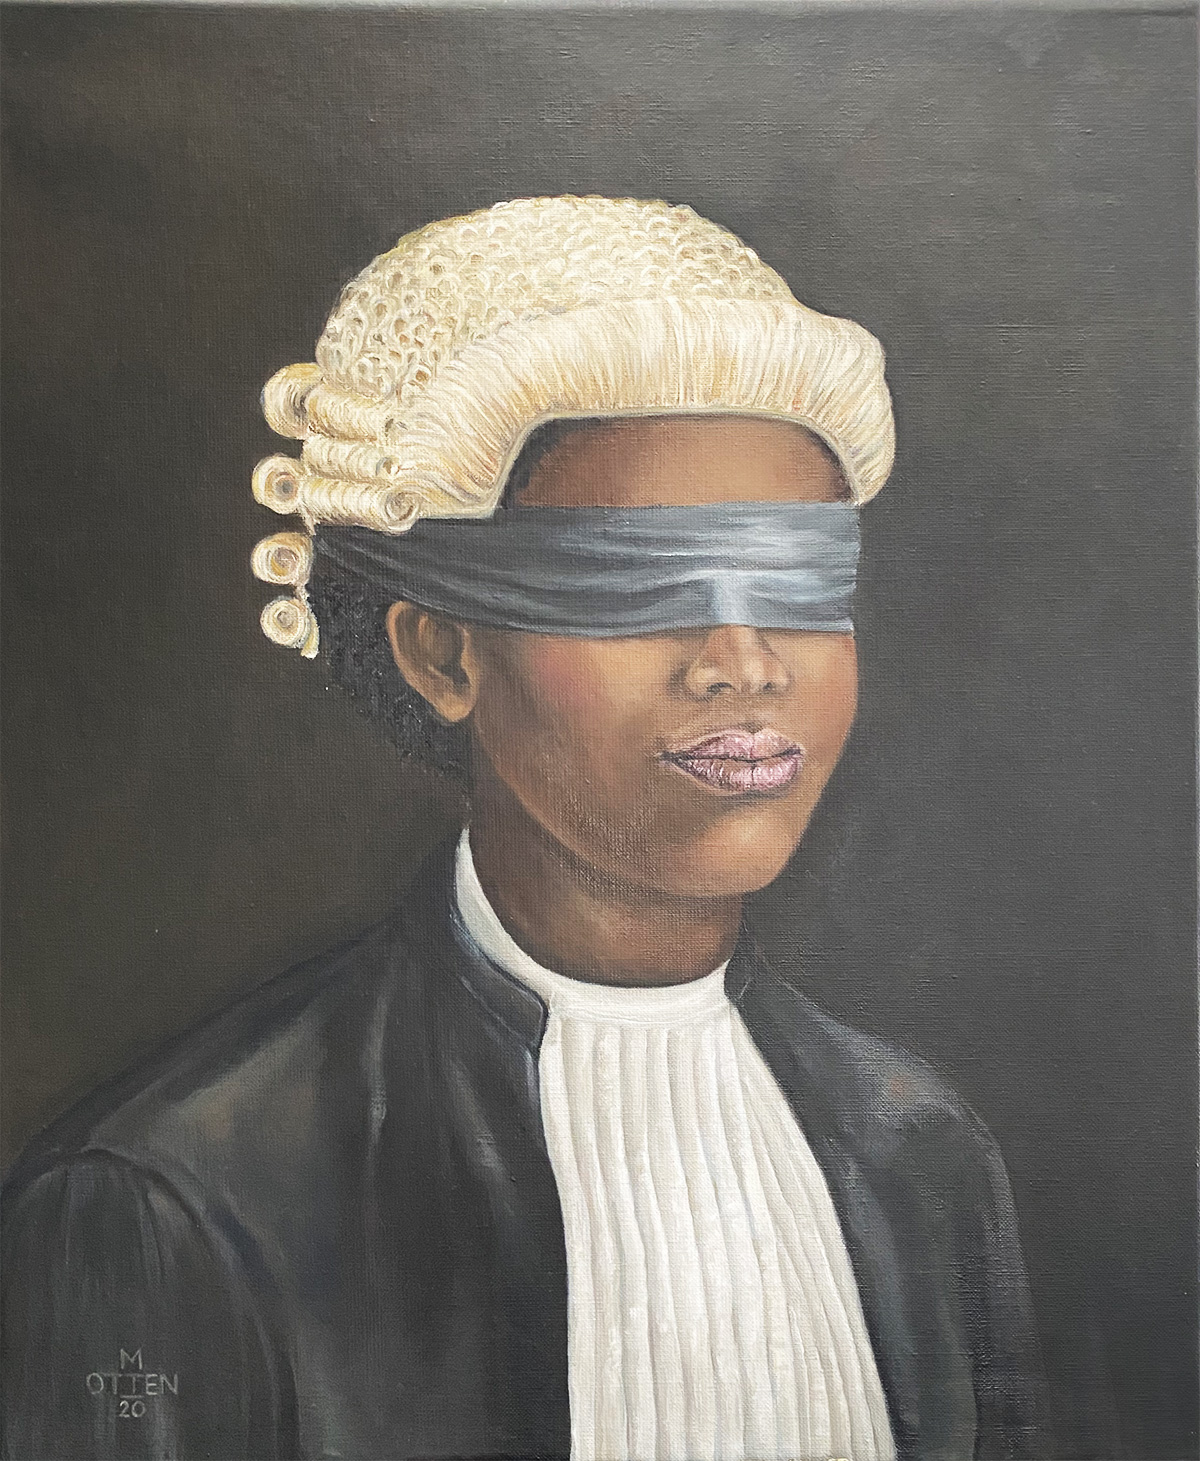 Donkere vrouw met witte 'Engelse' advocaten pruik - barrister wig